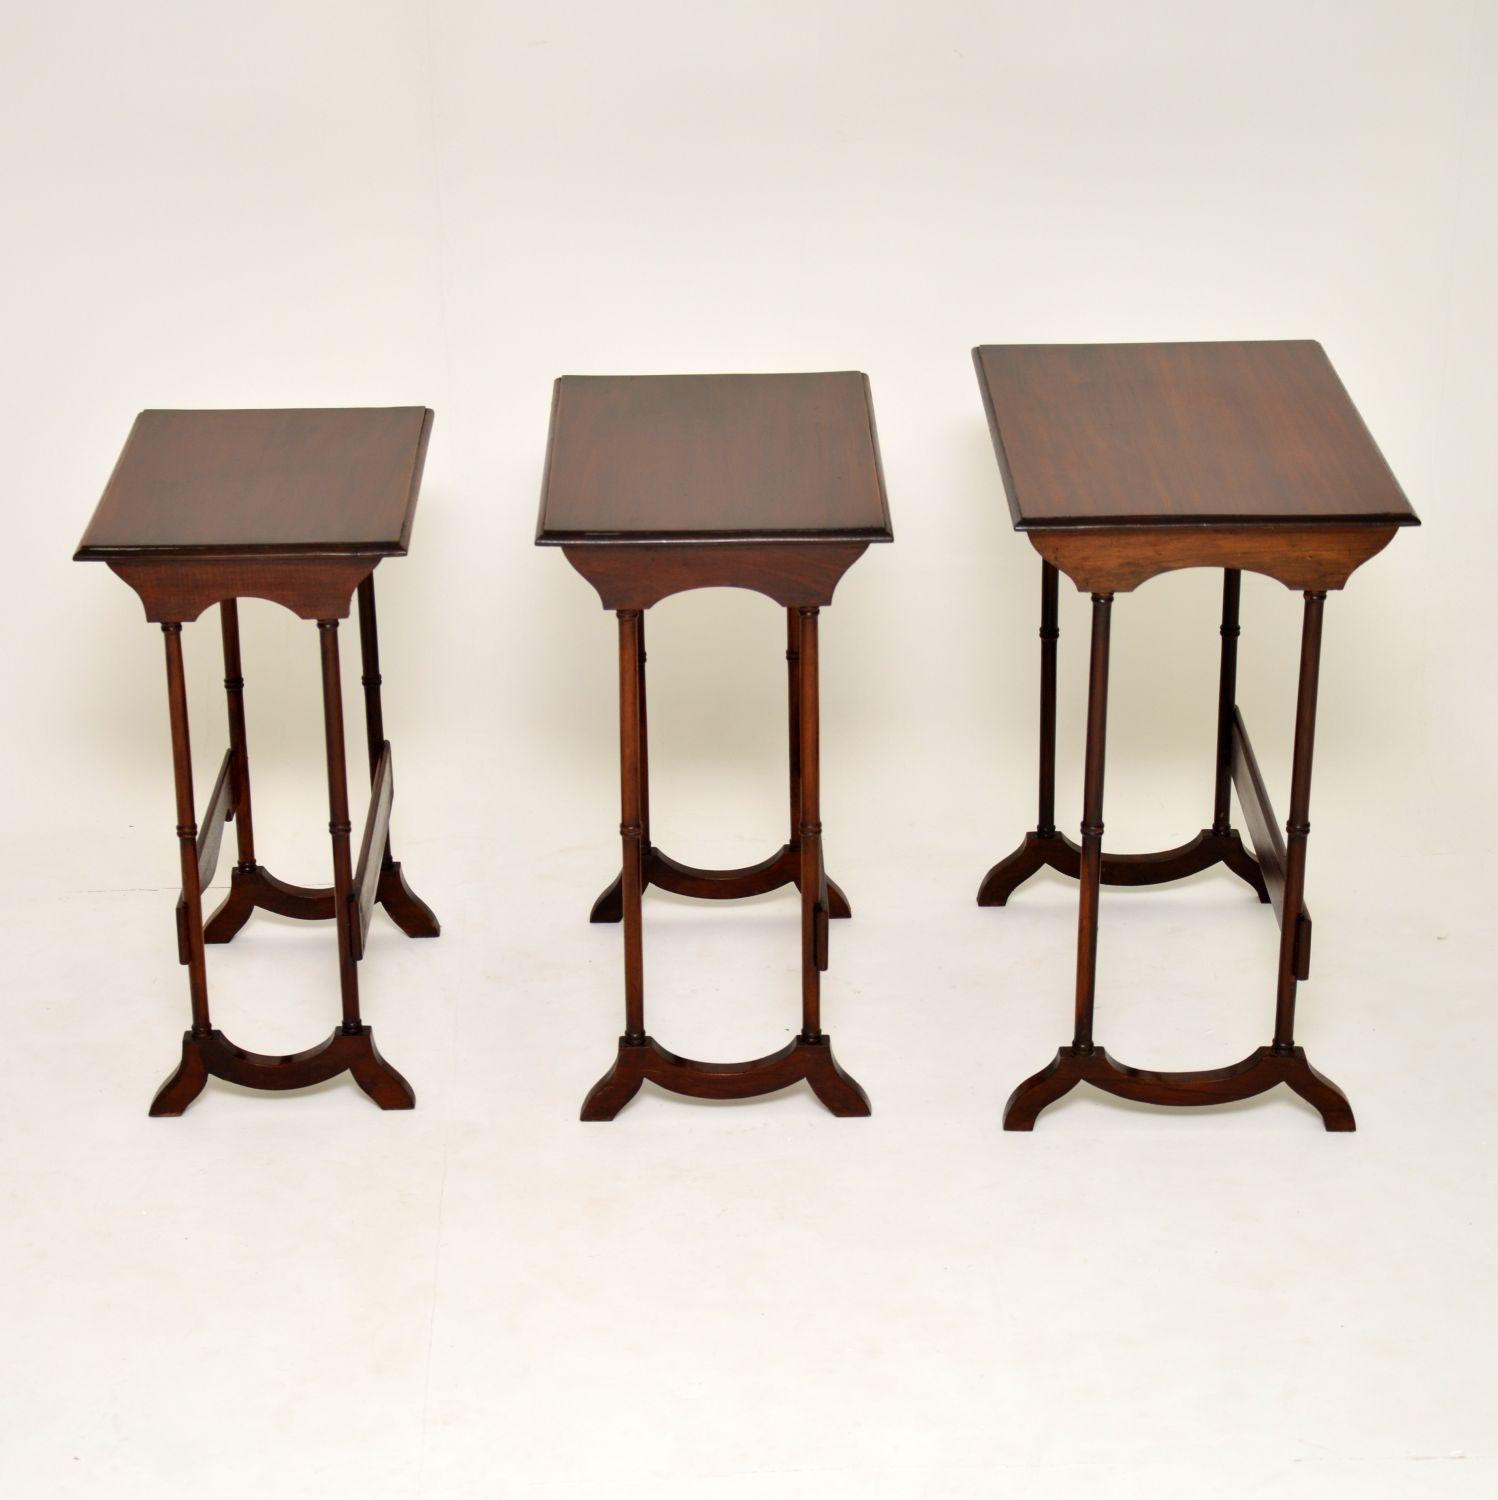 Early 20th Century Antique Mahogany Nest of Three Tables